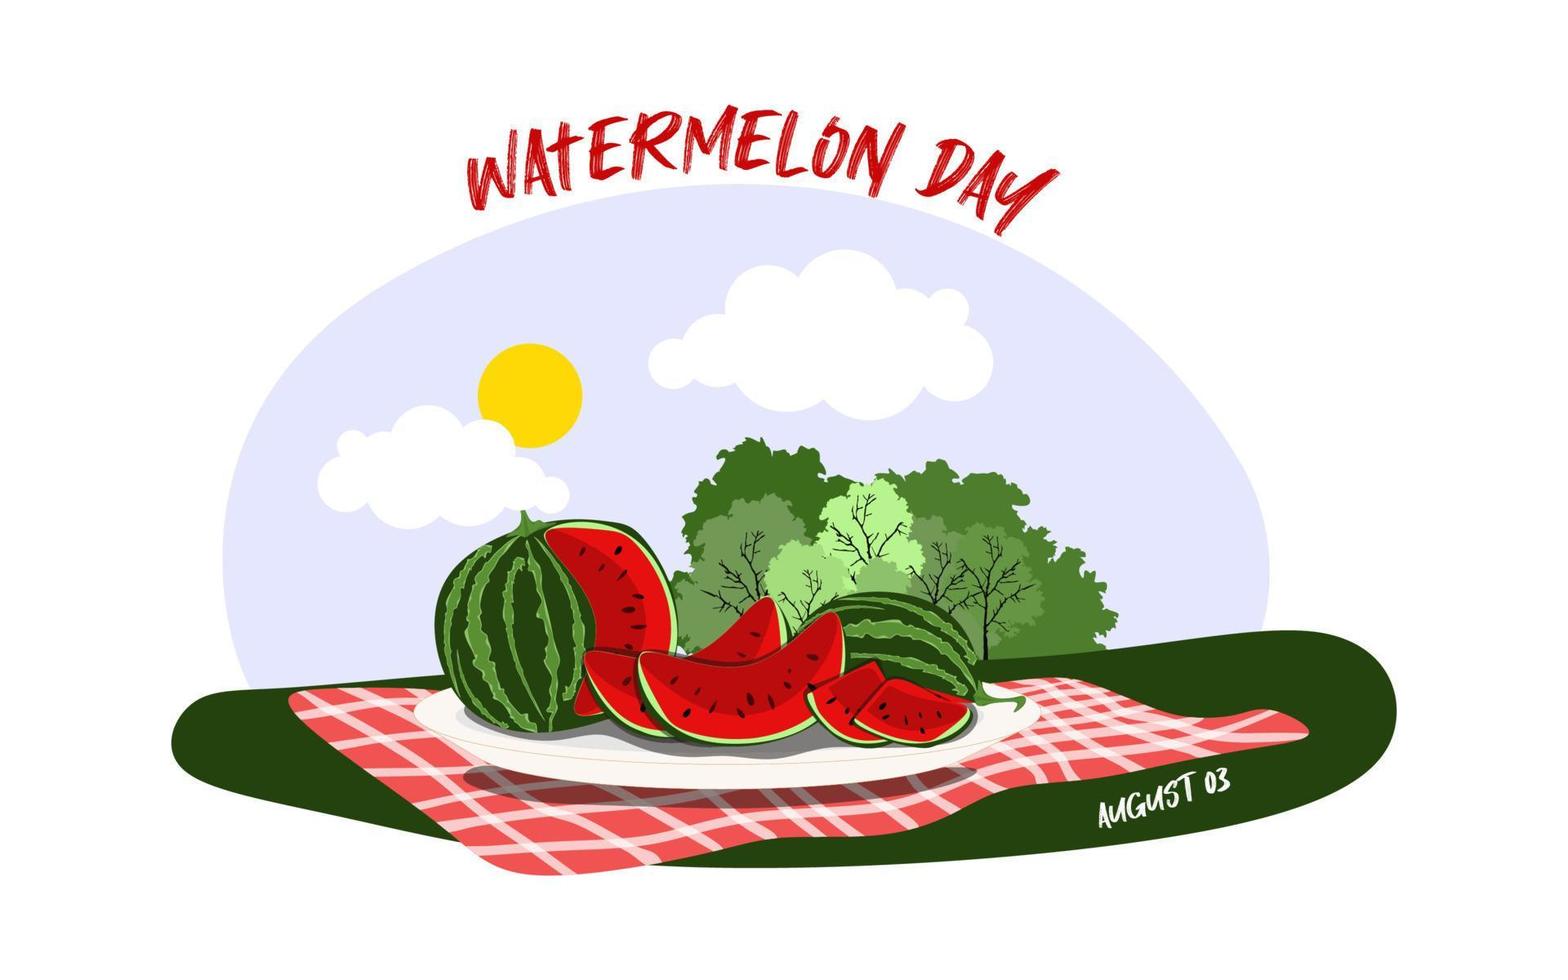 nationell vattenmelon dag affisch med kalligrafi text isolerat på vit bakgrund vektor